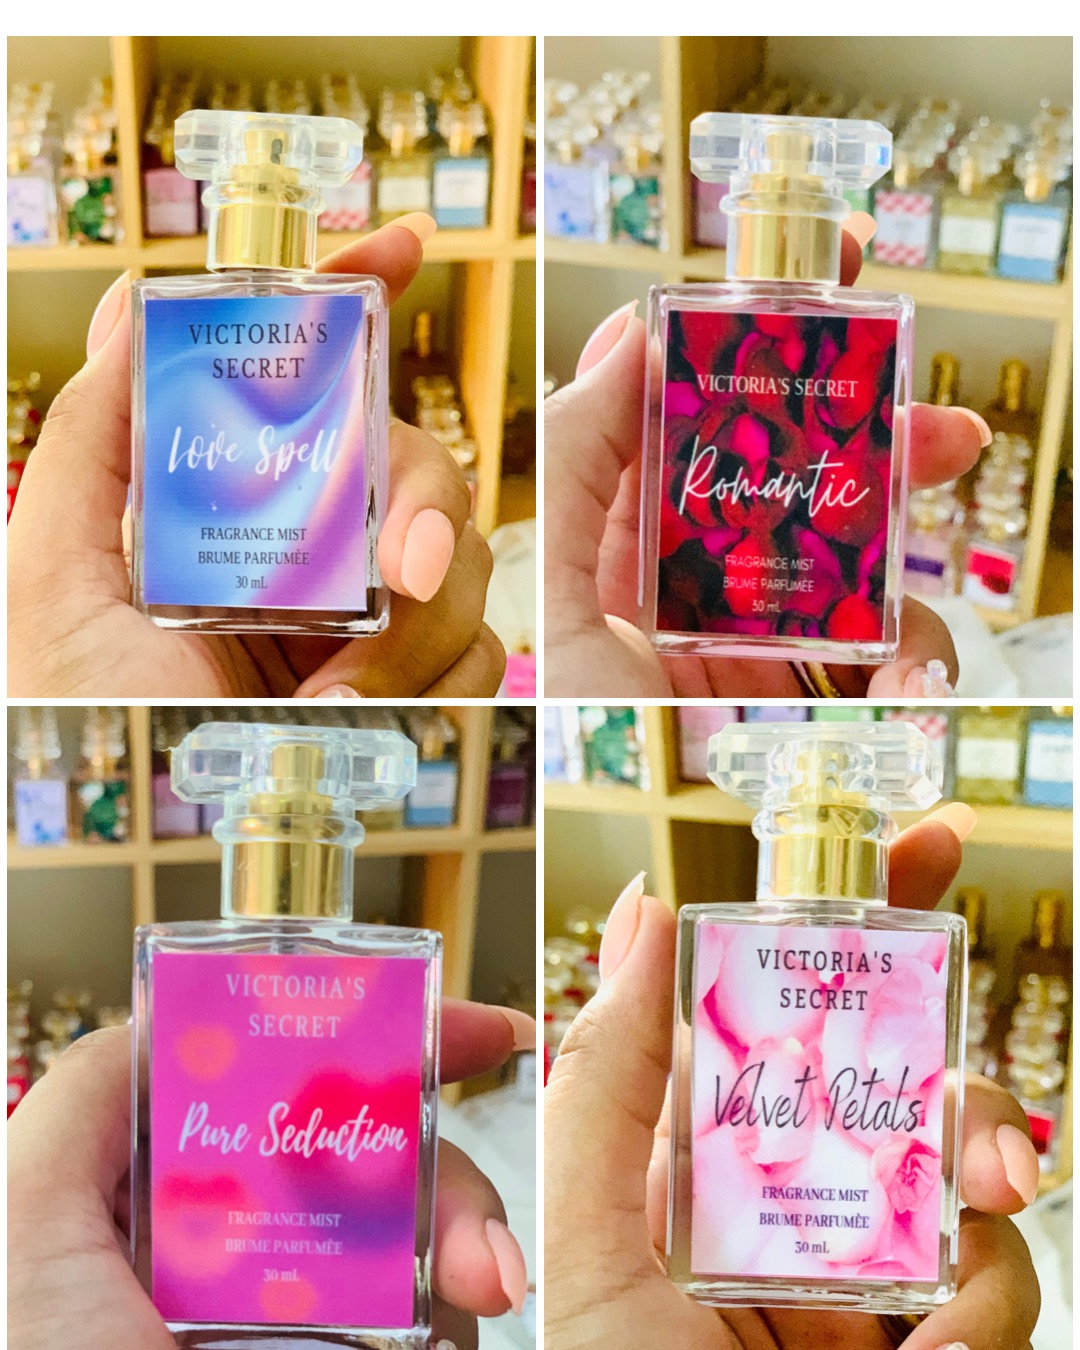 Pin by stephs memes on 0  Victoria secret perfume, Victoria secret perfume  body spray, Bath and body works perfume